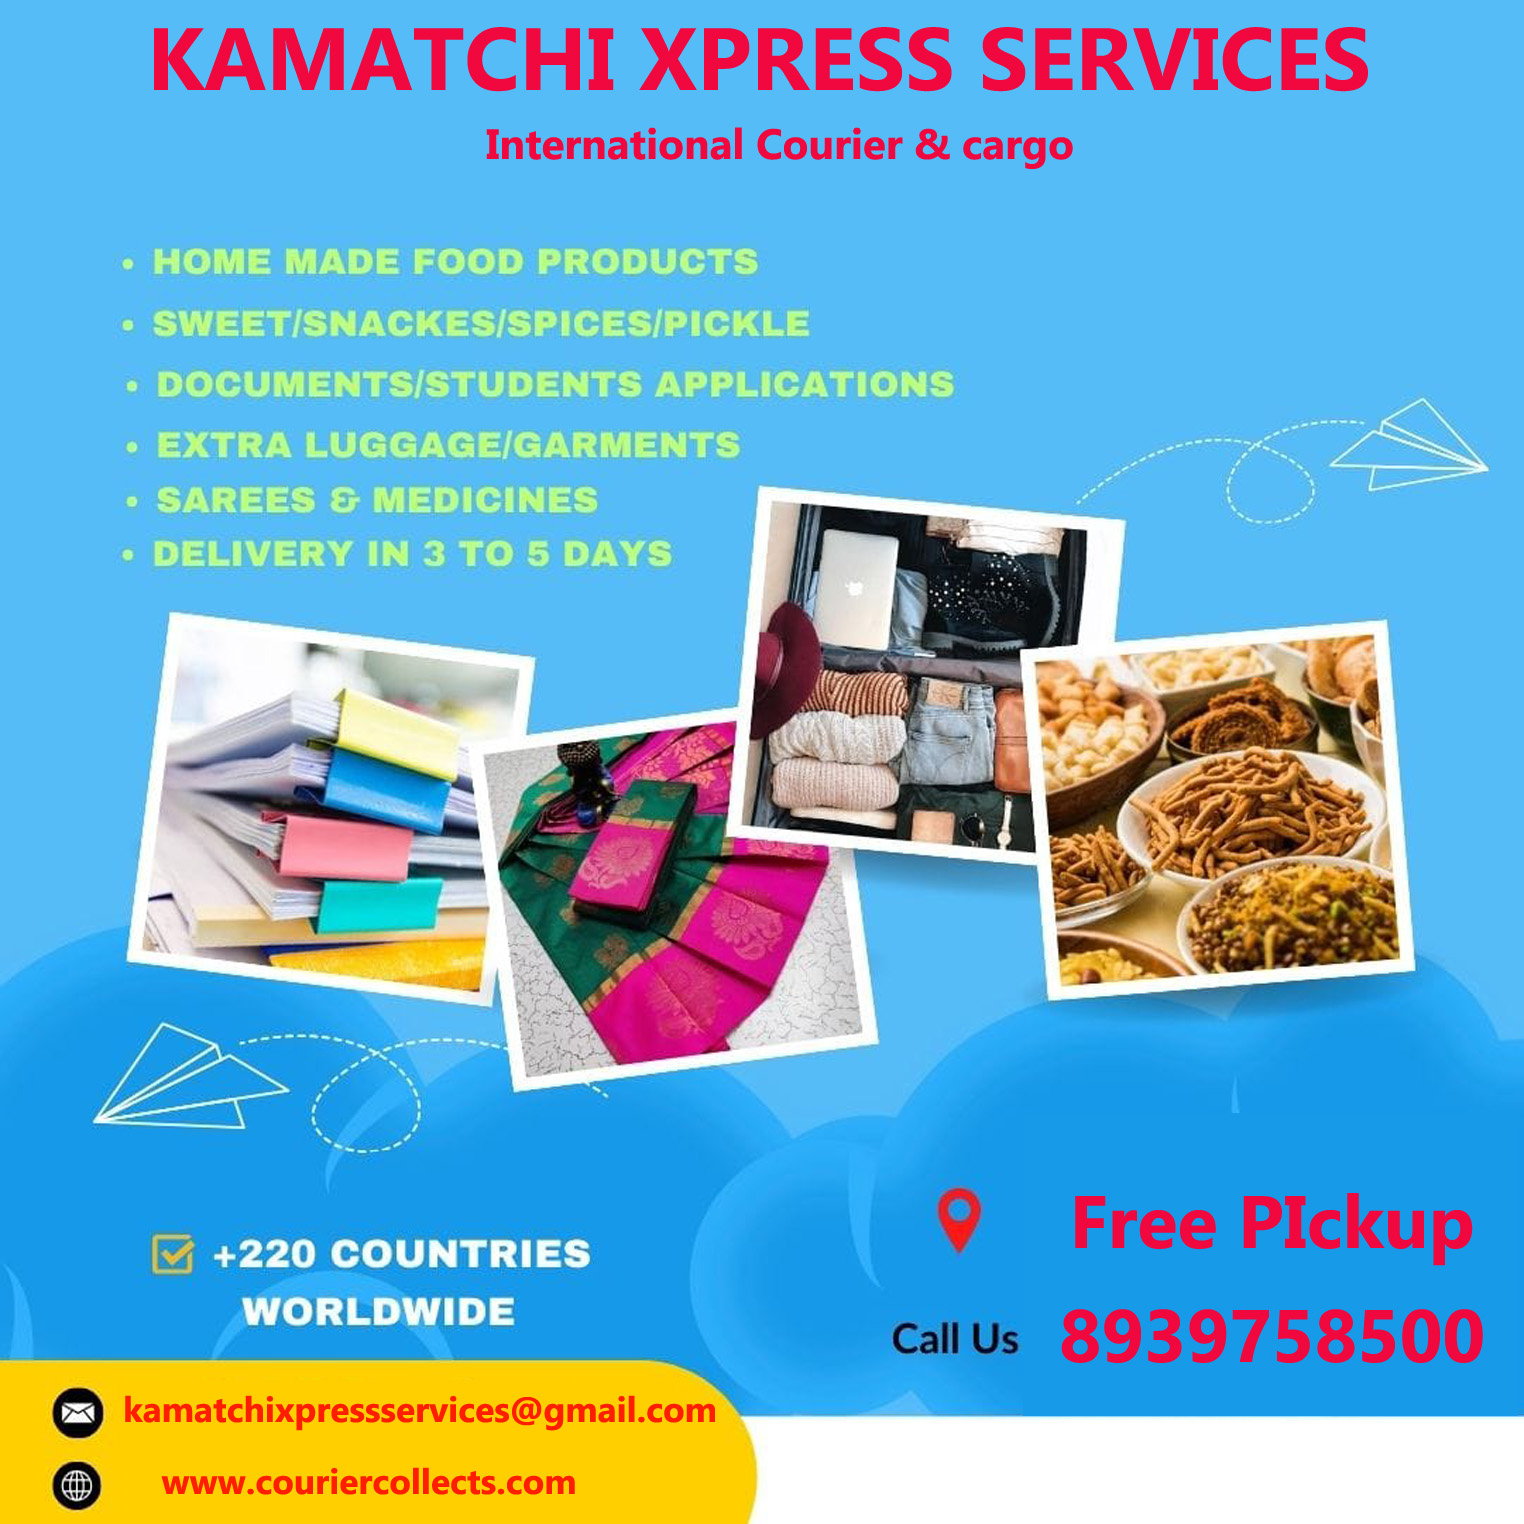 KAMATCHI XPRESS SERVICES PERUMBAKKAM 8939758500 - Tamil Nadu - Chennai ID1559068